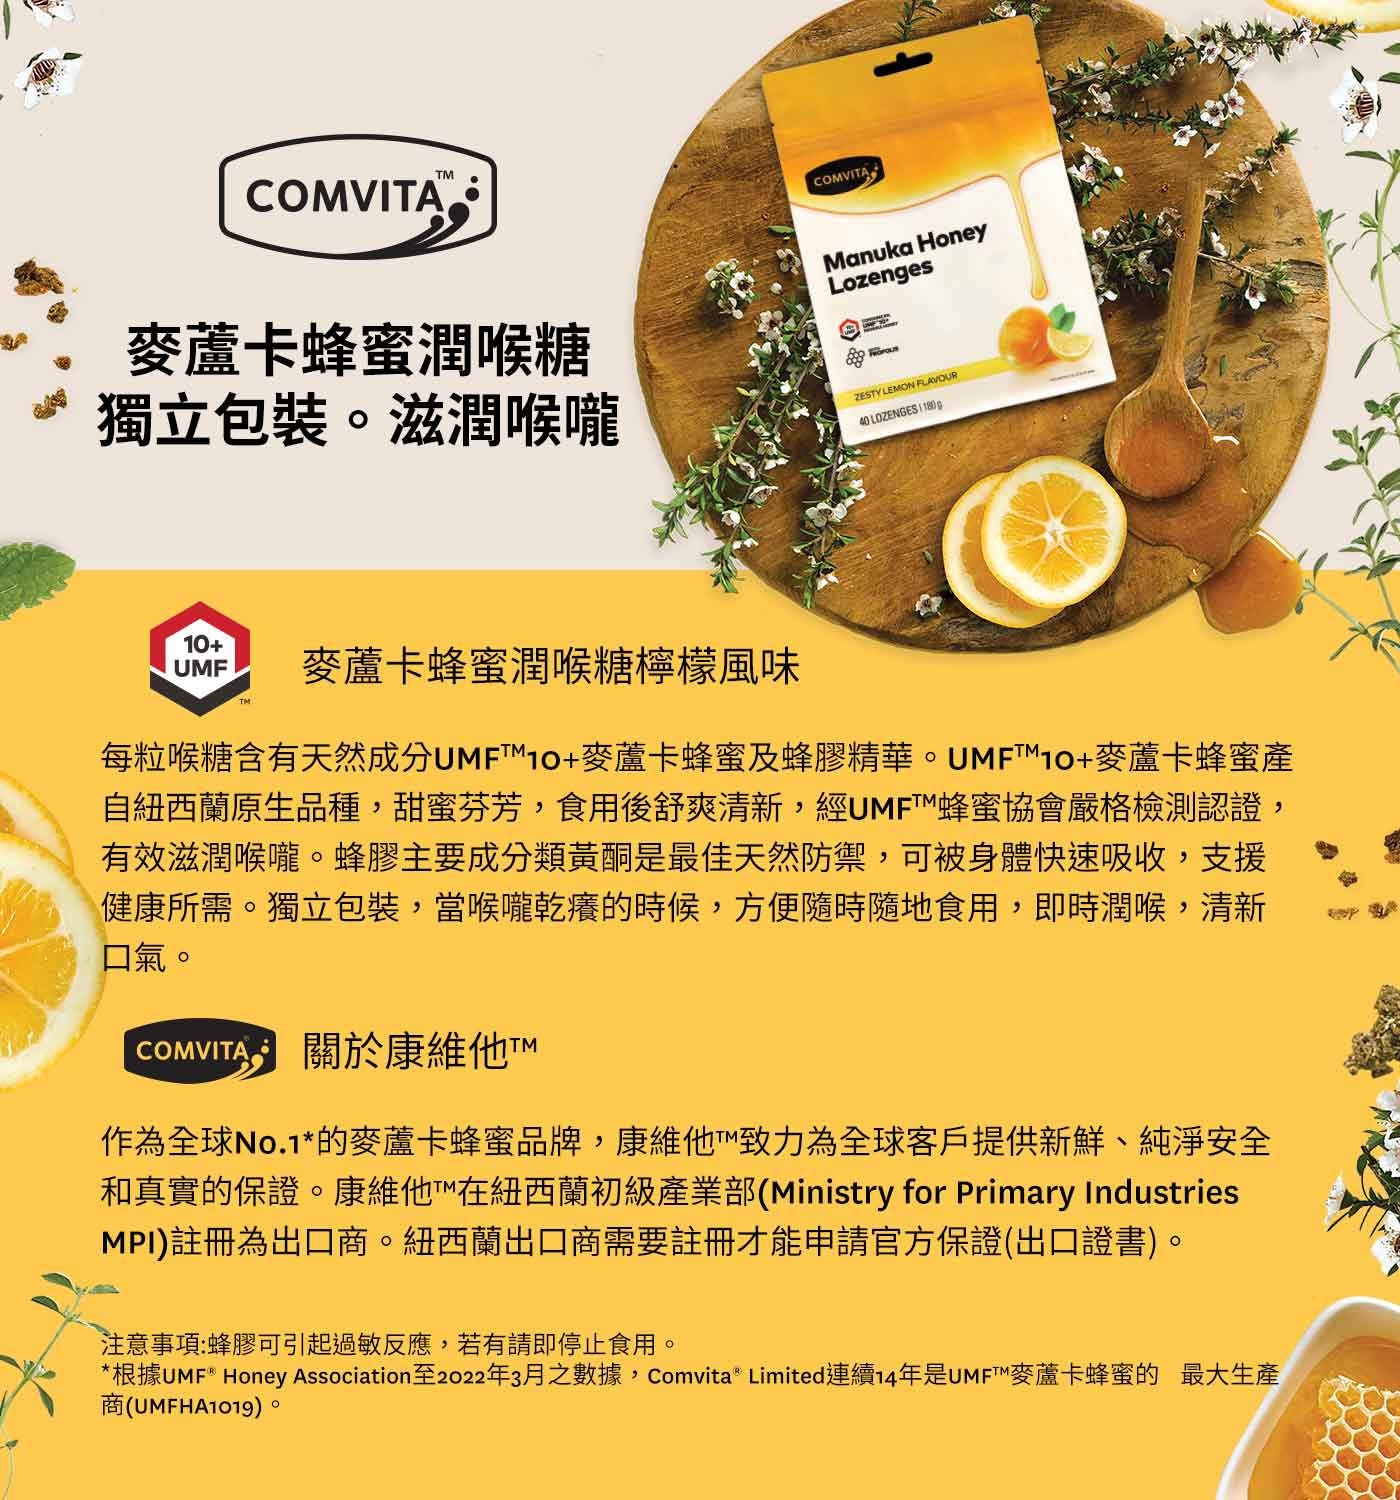 Comvita 康維他麥蘆卡蜂蜜潤喉糖檸檬風味幫助潤喉、舒爽清新，獨立包裝，方便攜帶。